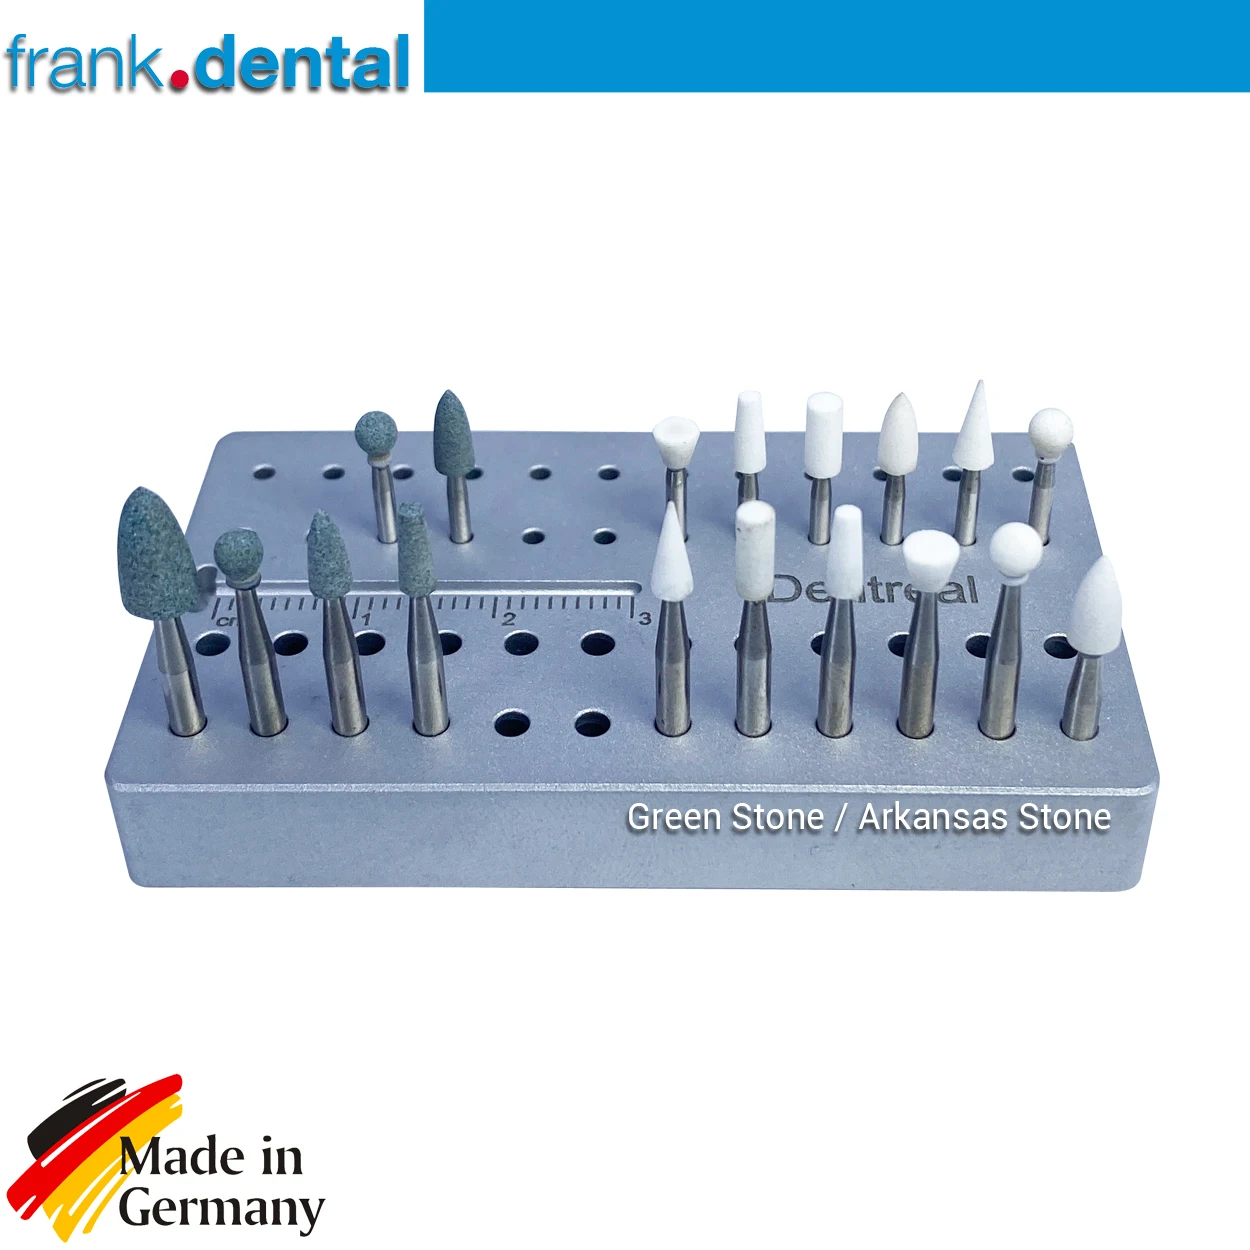 Frank Dental Green Stone Dental Burs - Arkansas Stone Dental Burs - All together kit